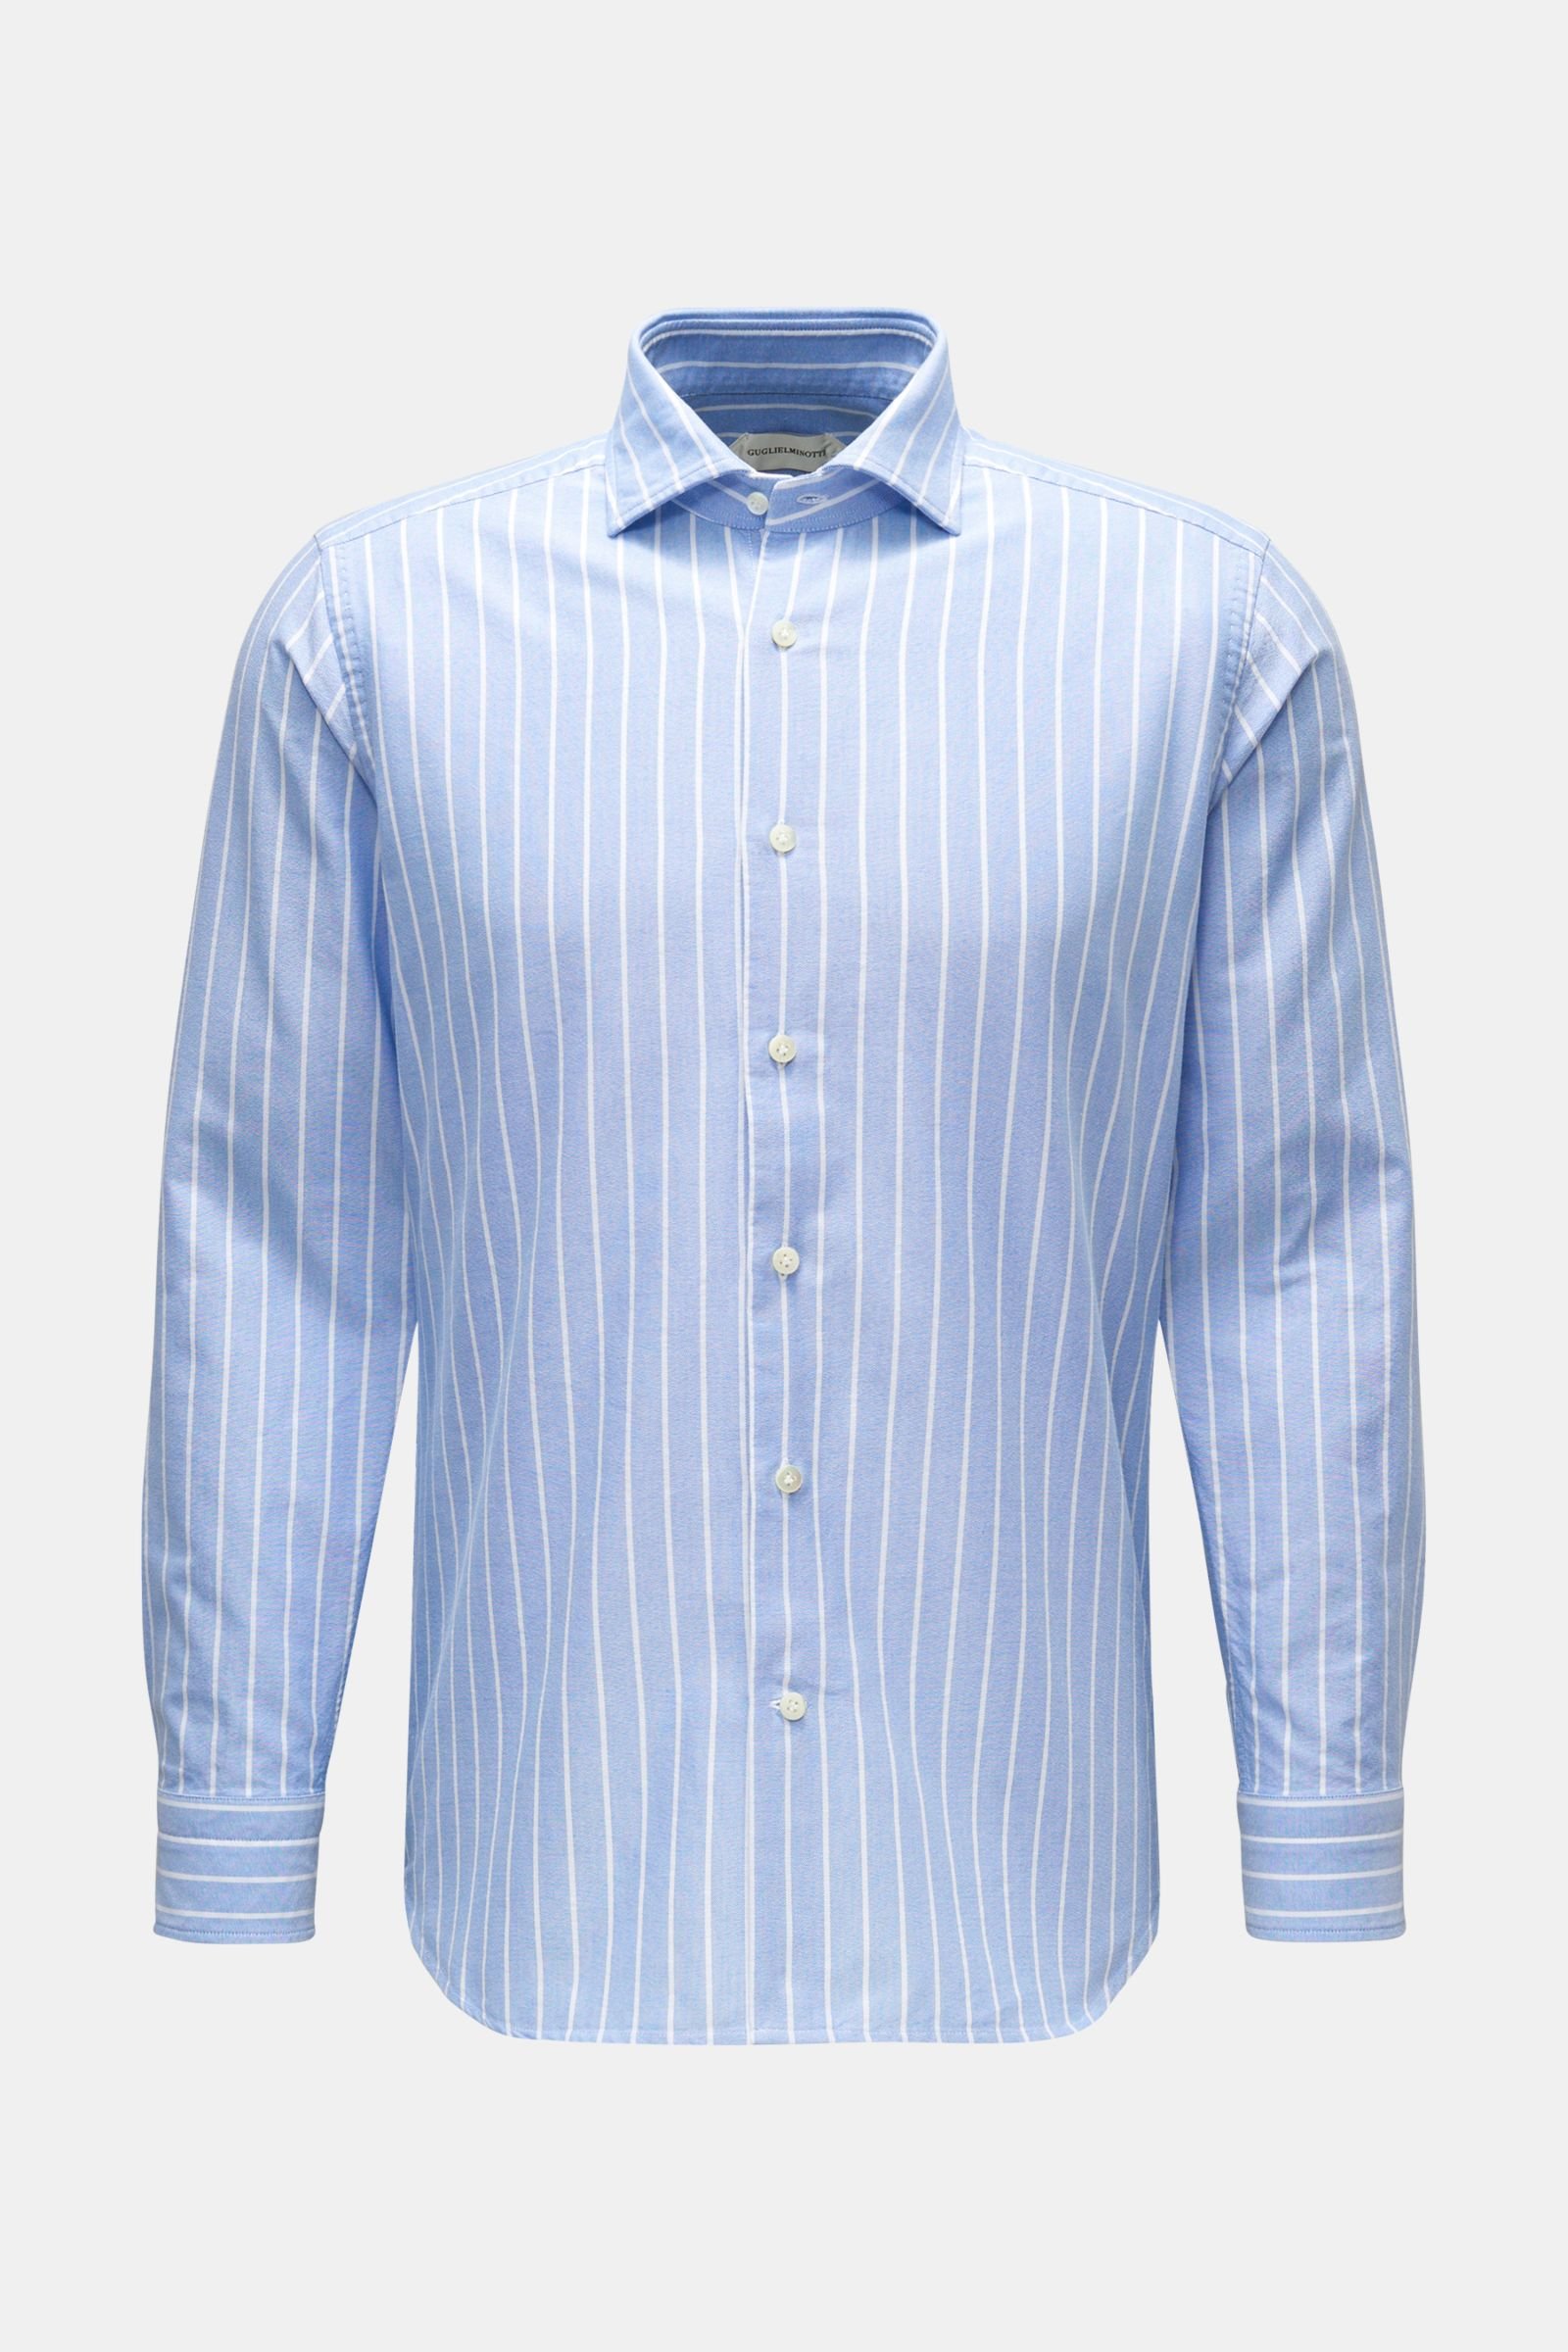 Oxford shirt shark collar smoky blue/white striped